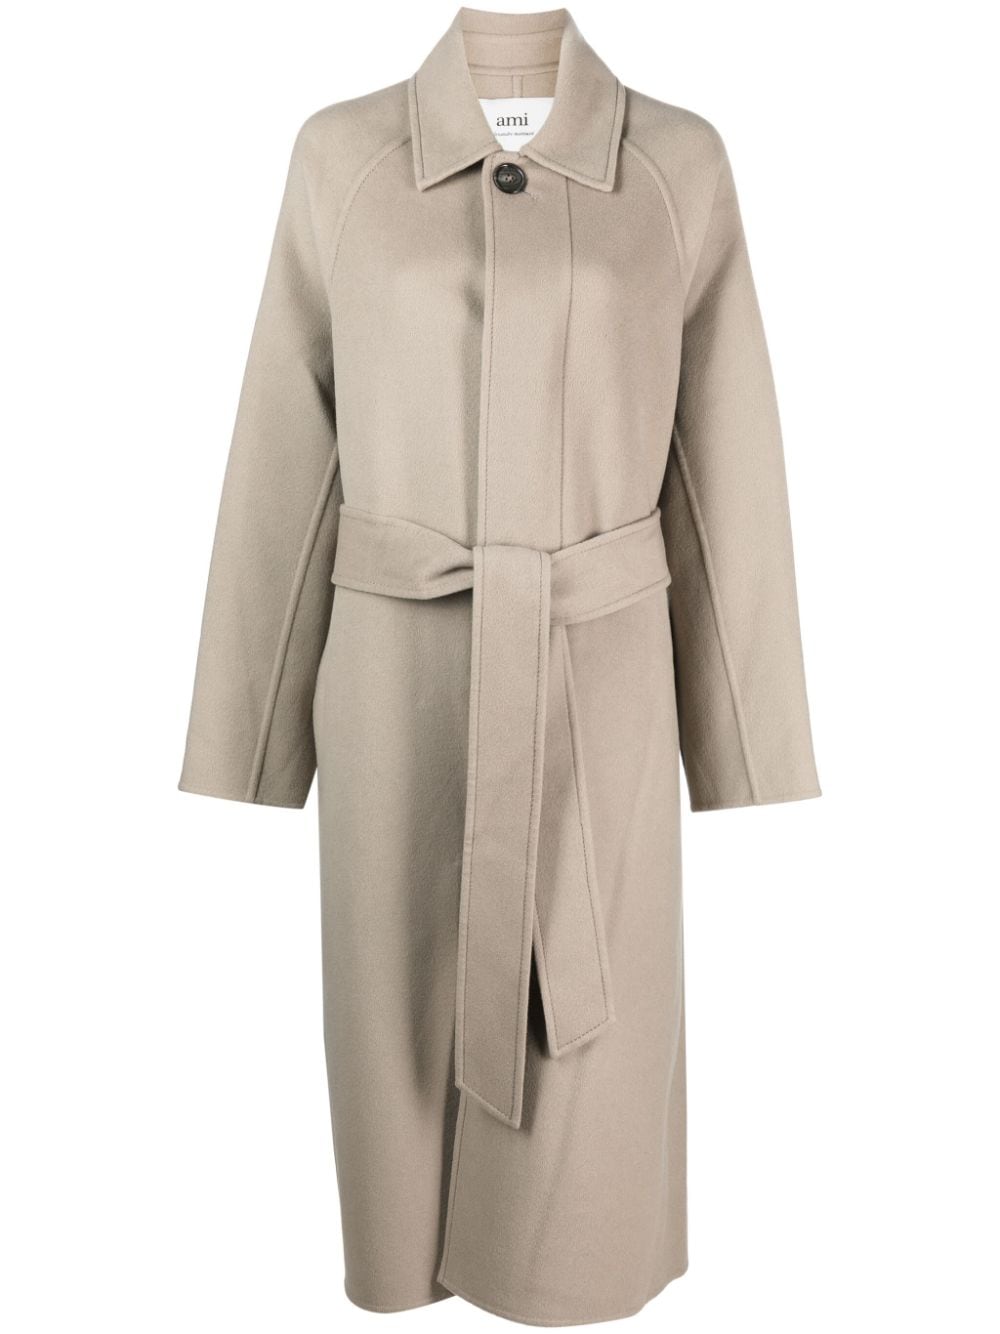 AMI PARIS Women's Beige Wool-Cashmere Blend Jacket with Classic Collar and Detachable Belt